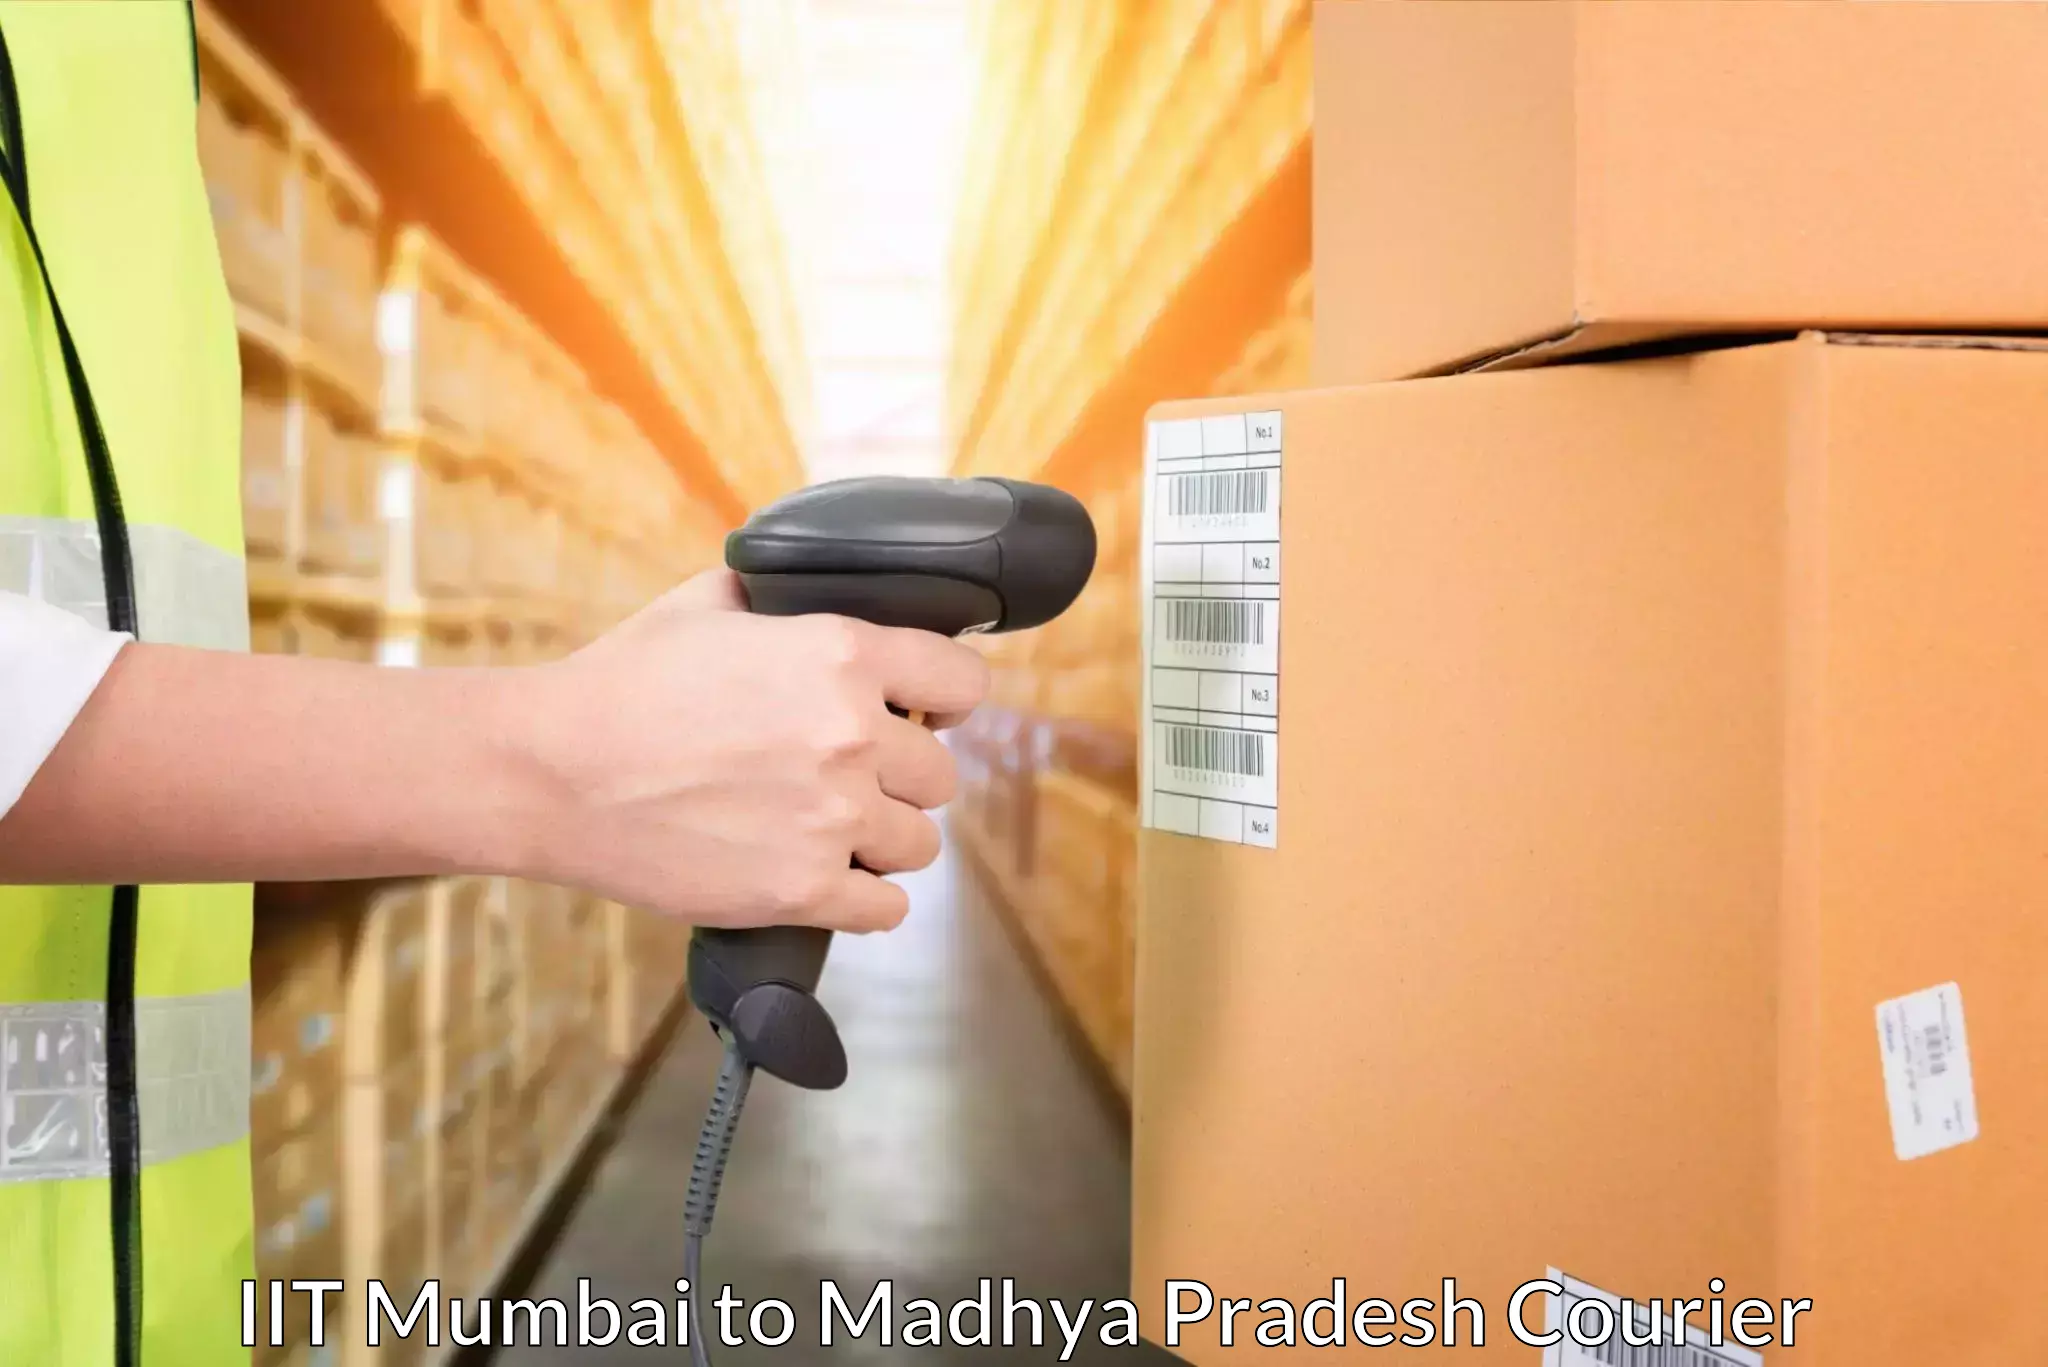 Professional courier handling IIT Mumbai to Waraseoni